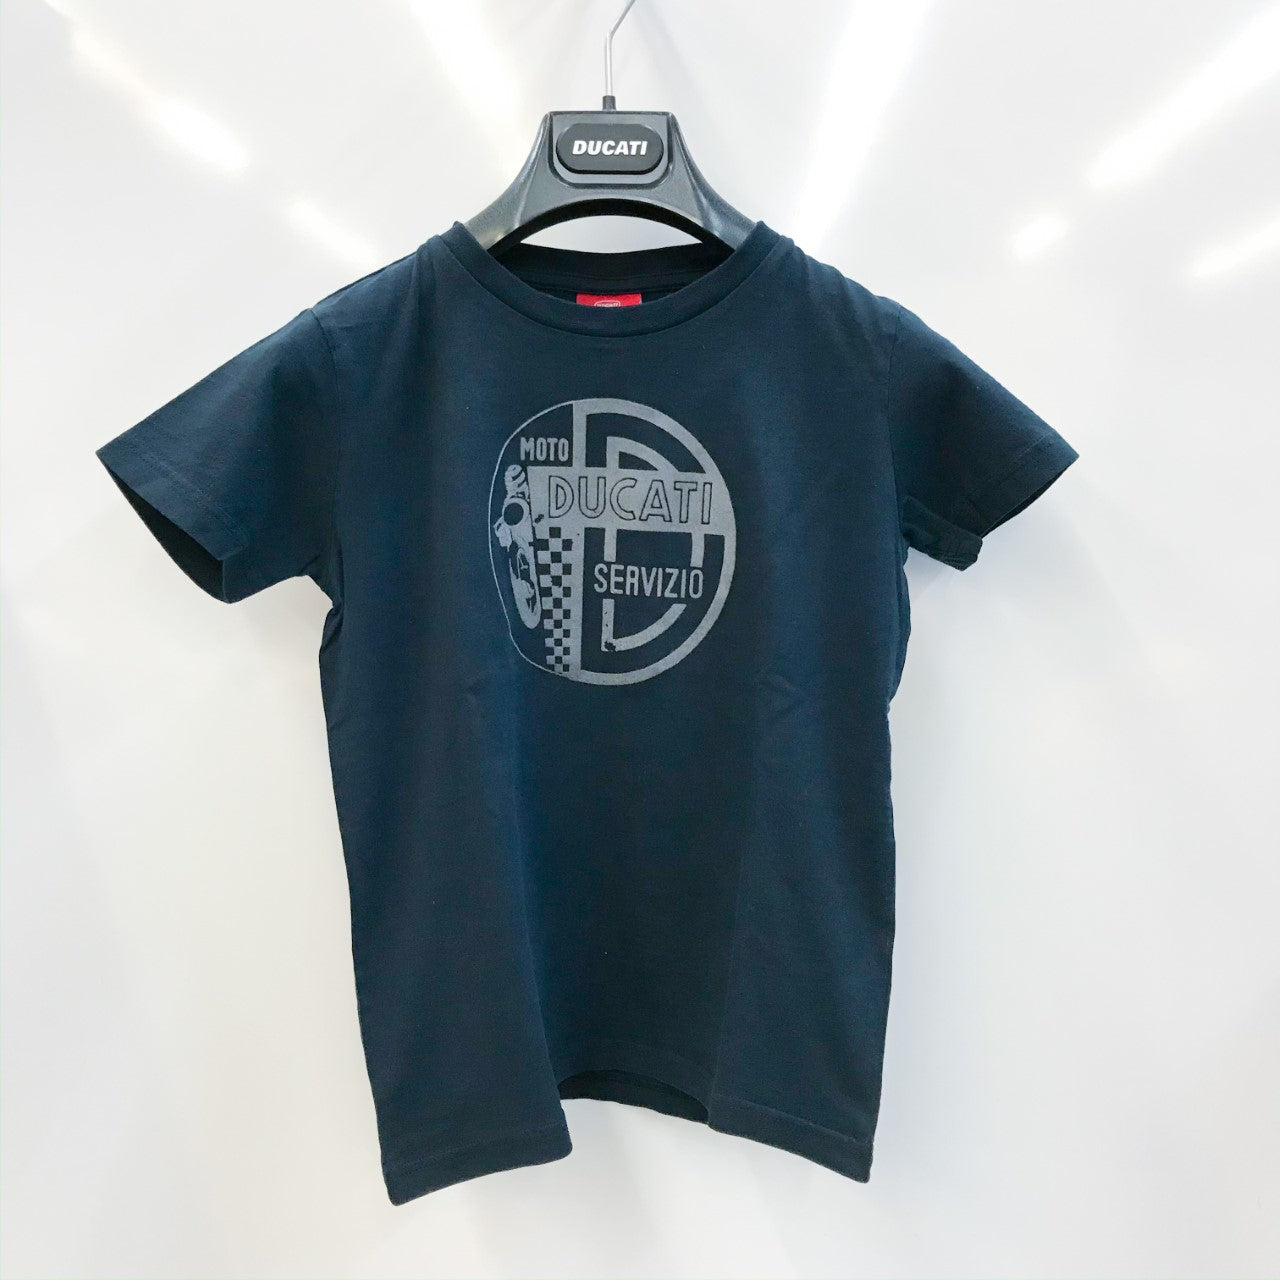 Ducati Kid's Servizio T-shirt